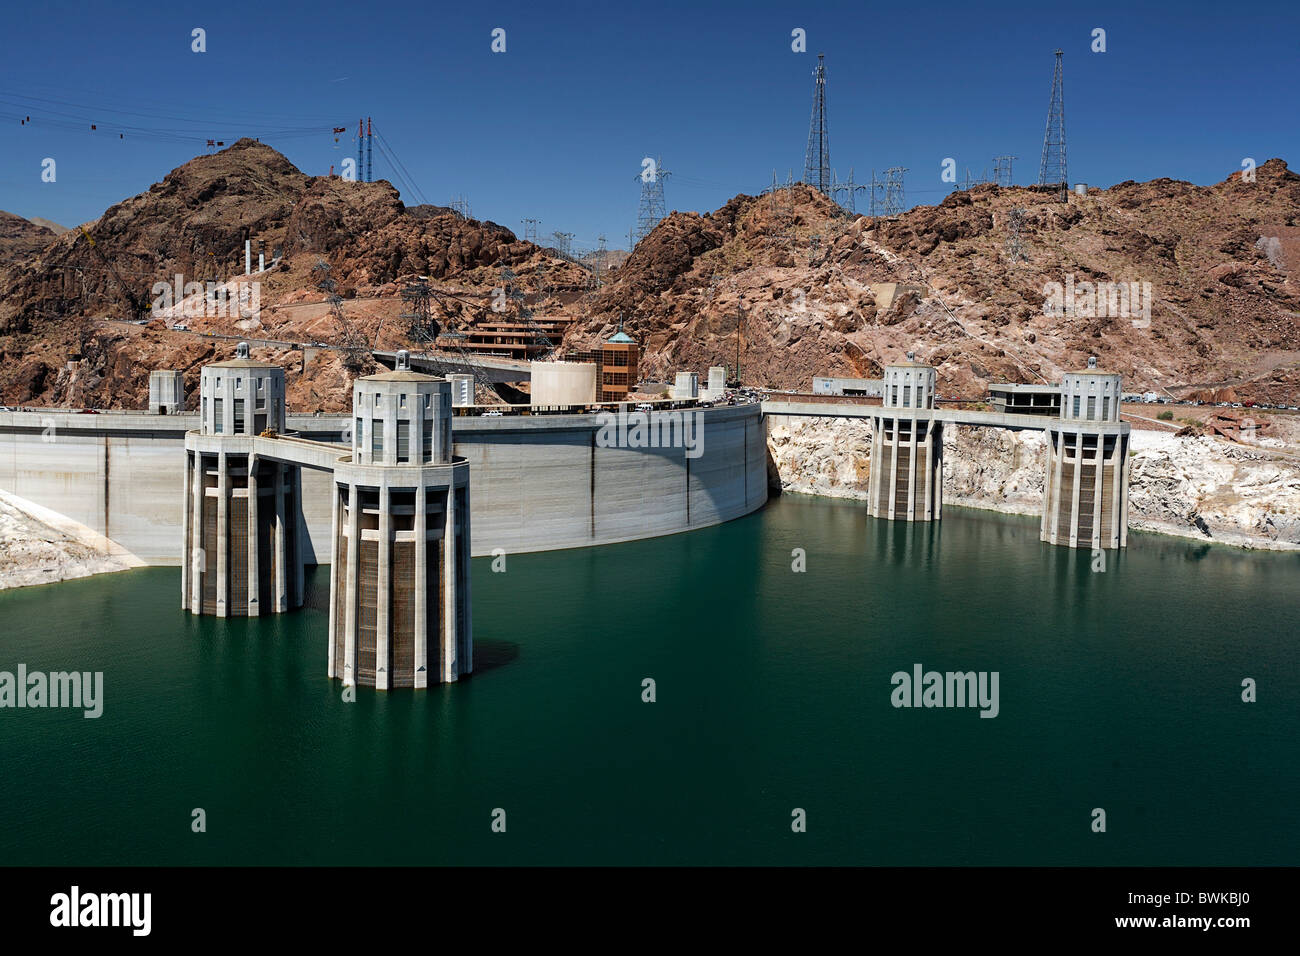 USA America North America Nevada Arizona Hoover Dam Lake Mead dam industry power station electricity Stock Photo